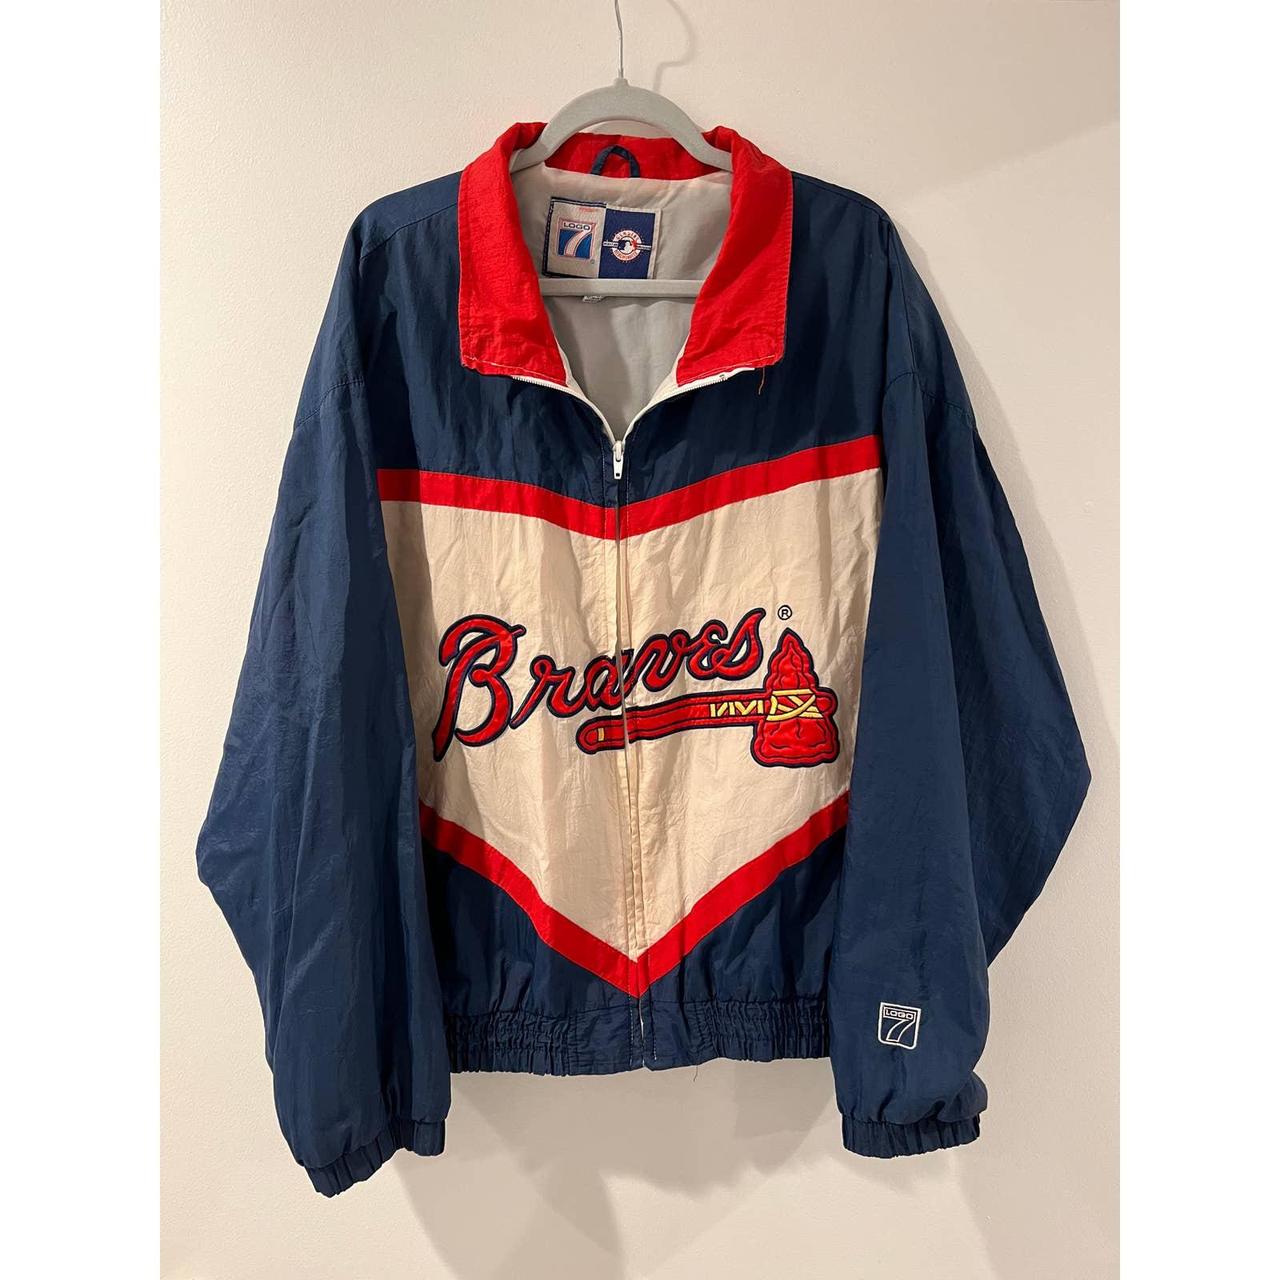 Vintage Atlanta Braves Windbreaker Rain Jacket, size